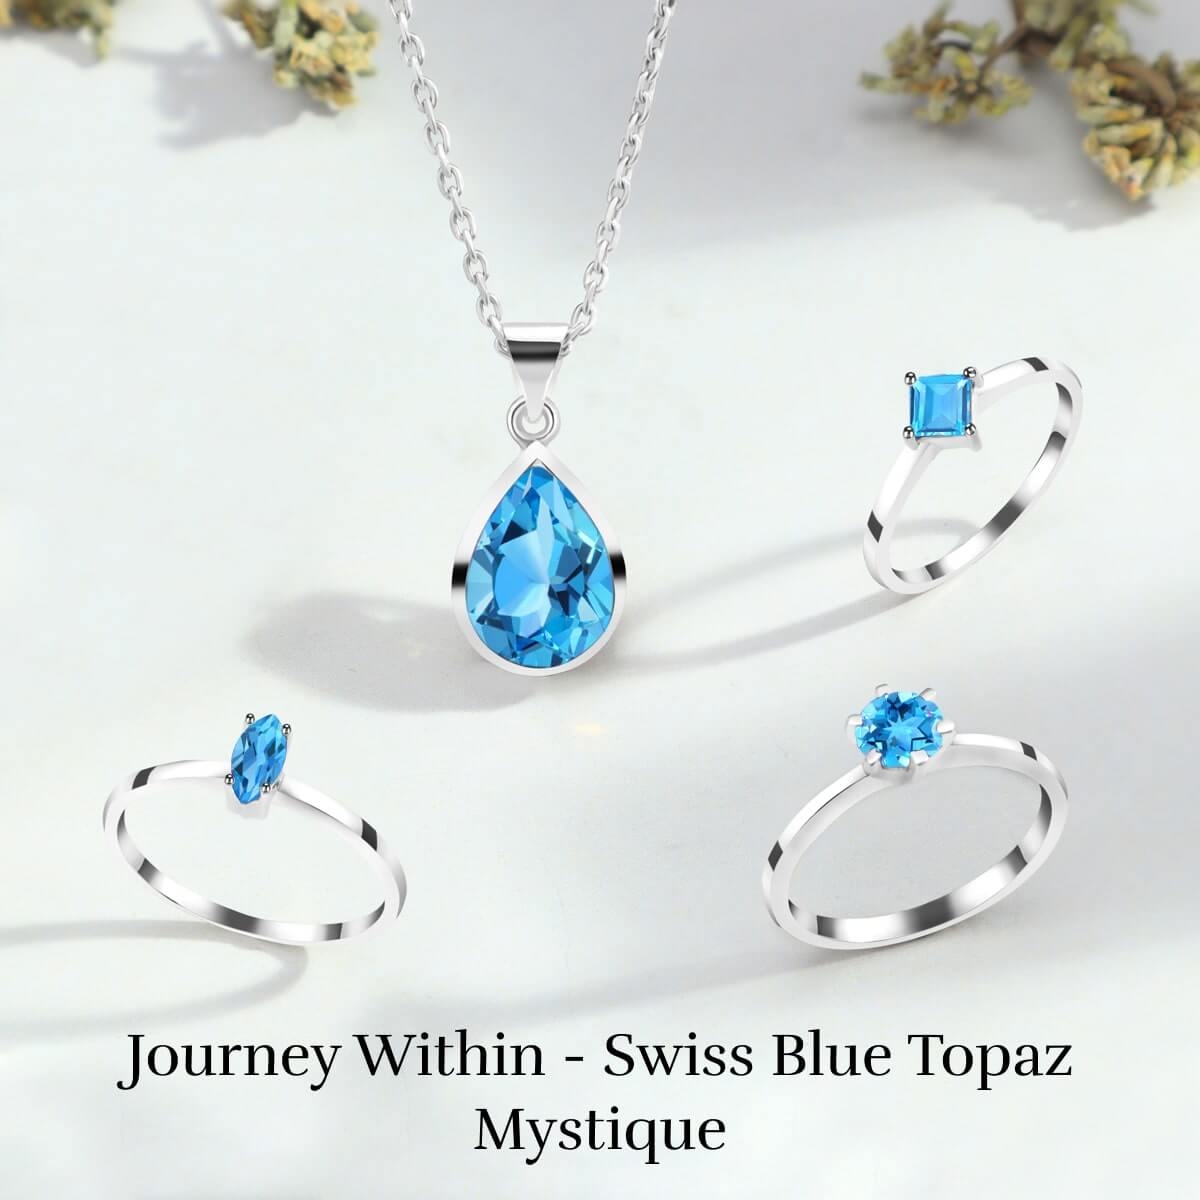 Nomadic Elegance: Blue Topaz Jewelry for Adventurous Souls